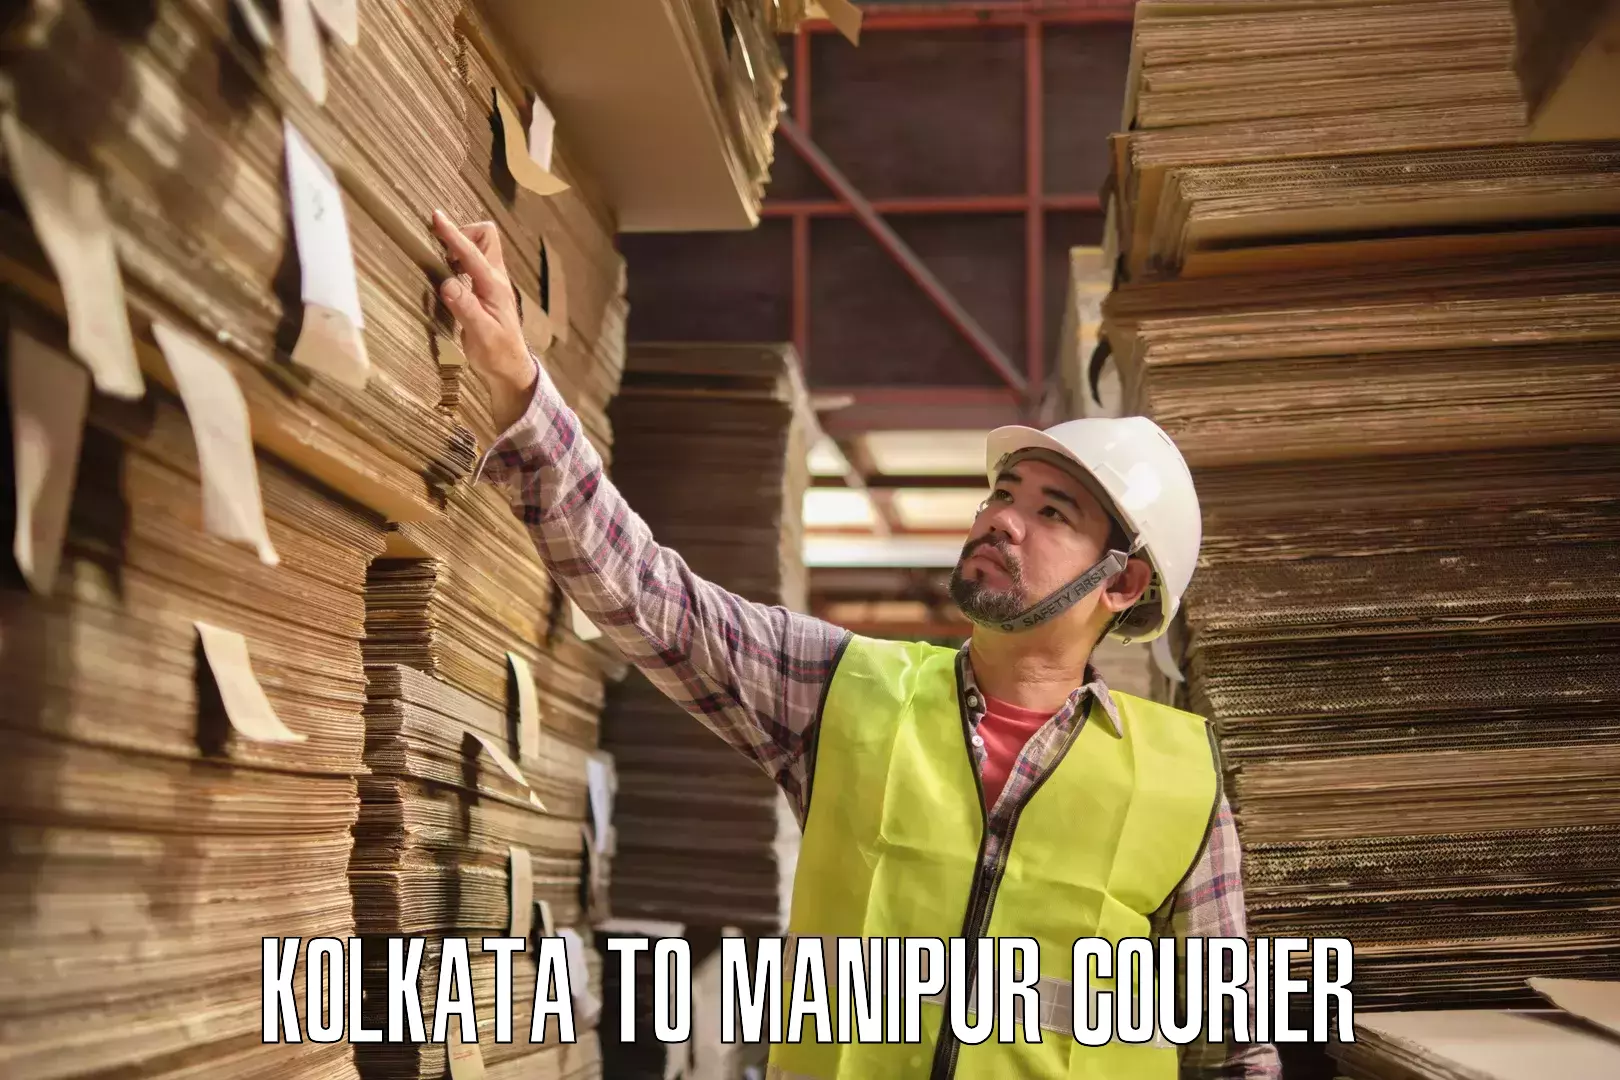 Courier service innovation Kolkata to Ukhrul